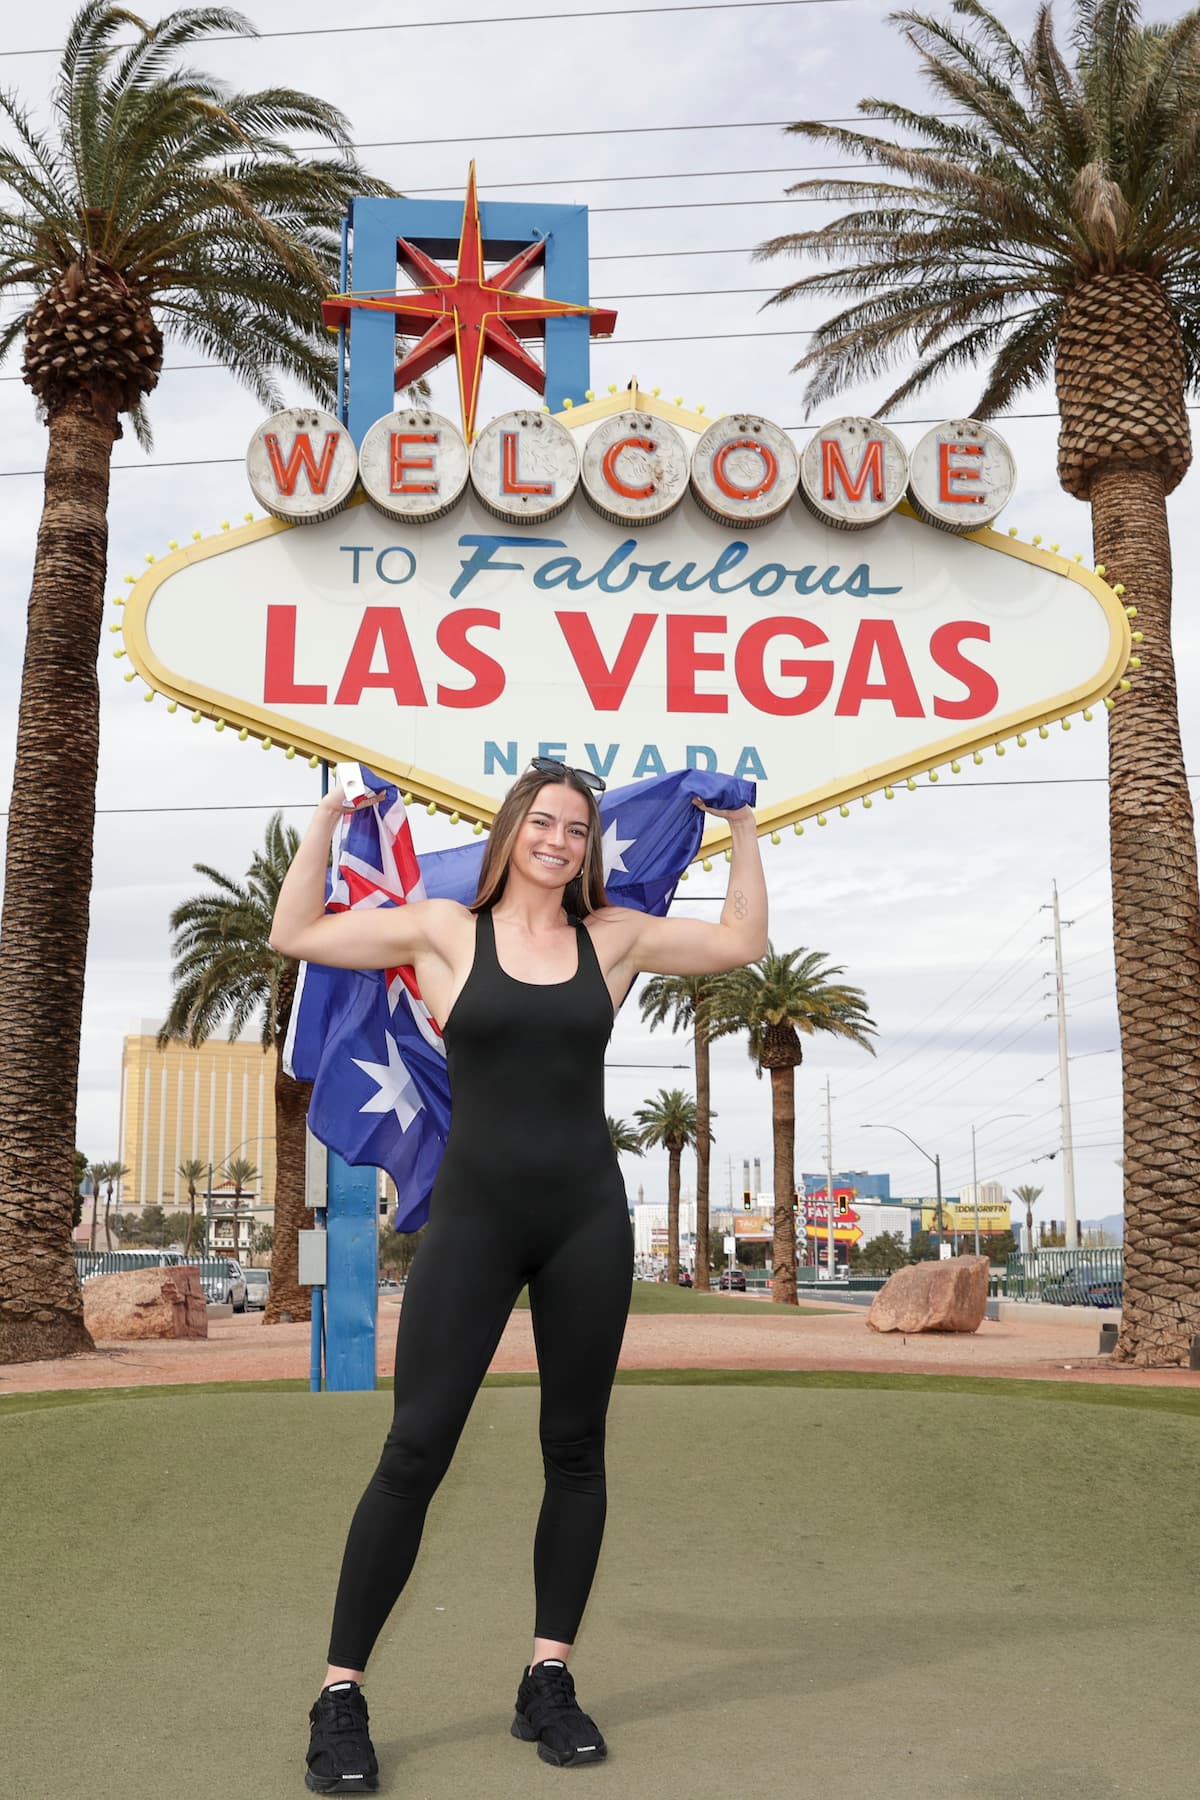 Skye Nicolson in Las Vegas